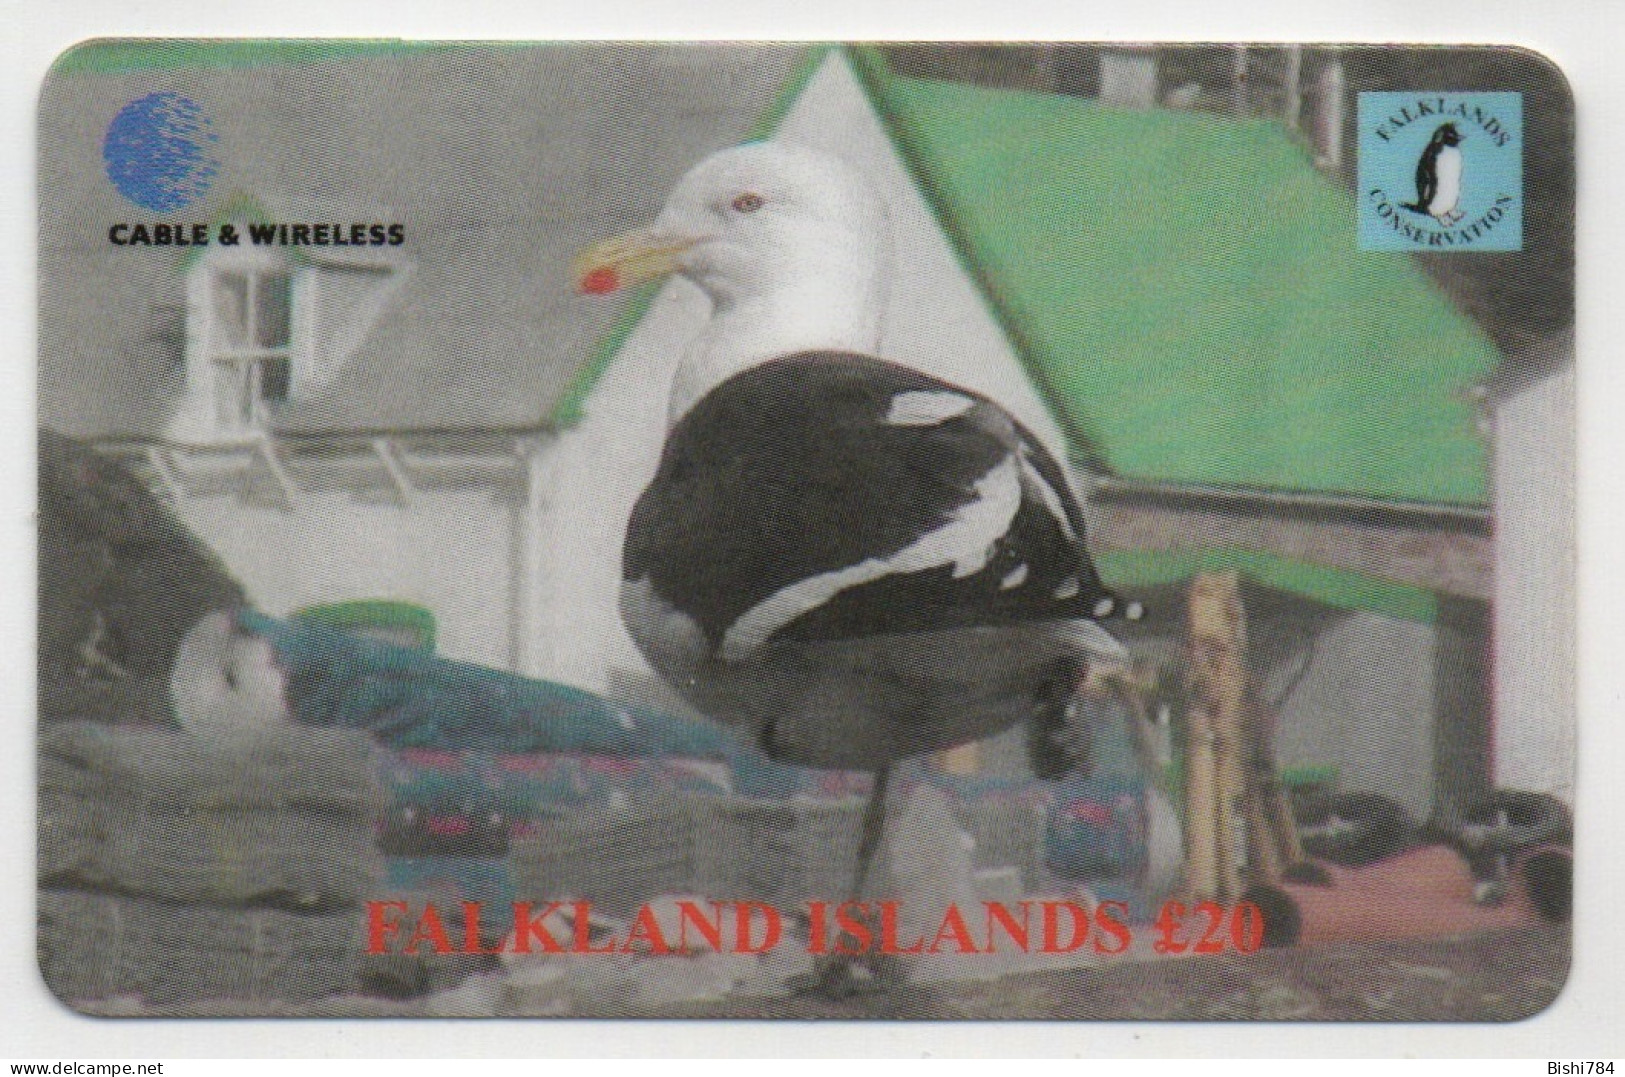 Falkland Islands - Seagull - Falkland